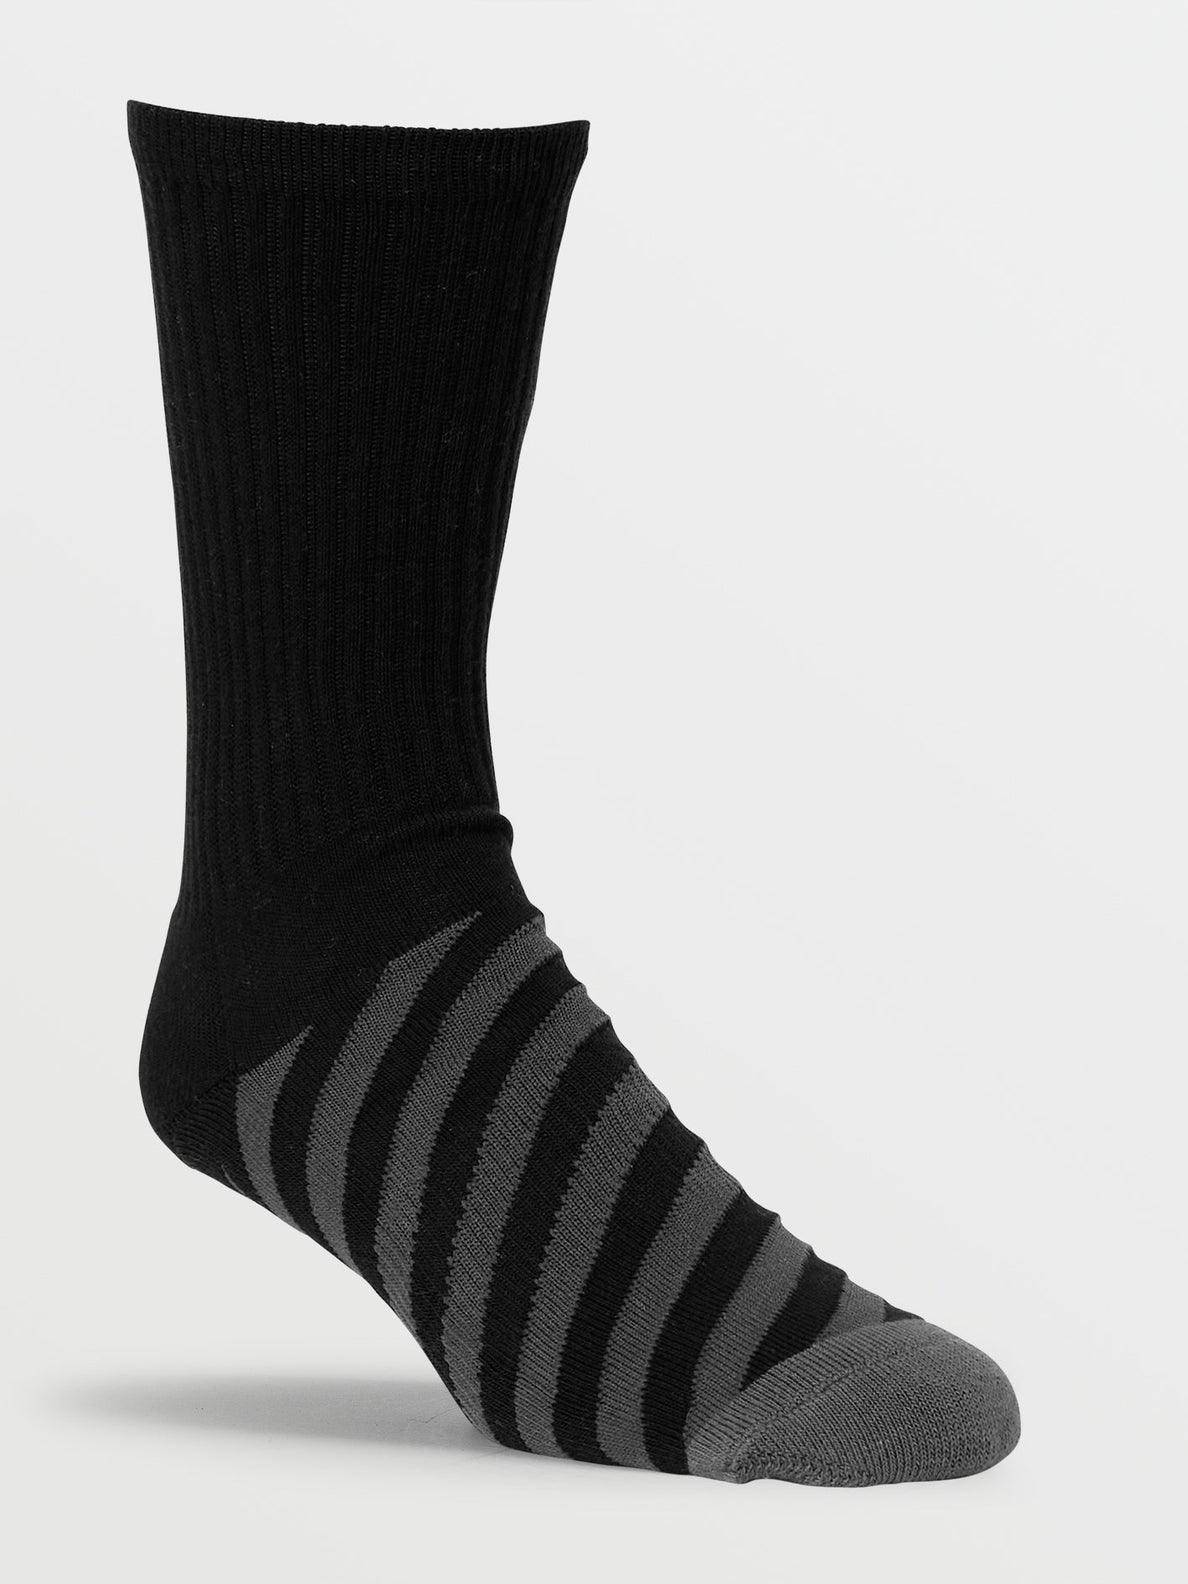 Vibes Socks - Asphalt Black (D6302003_ASB) [B]